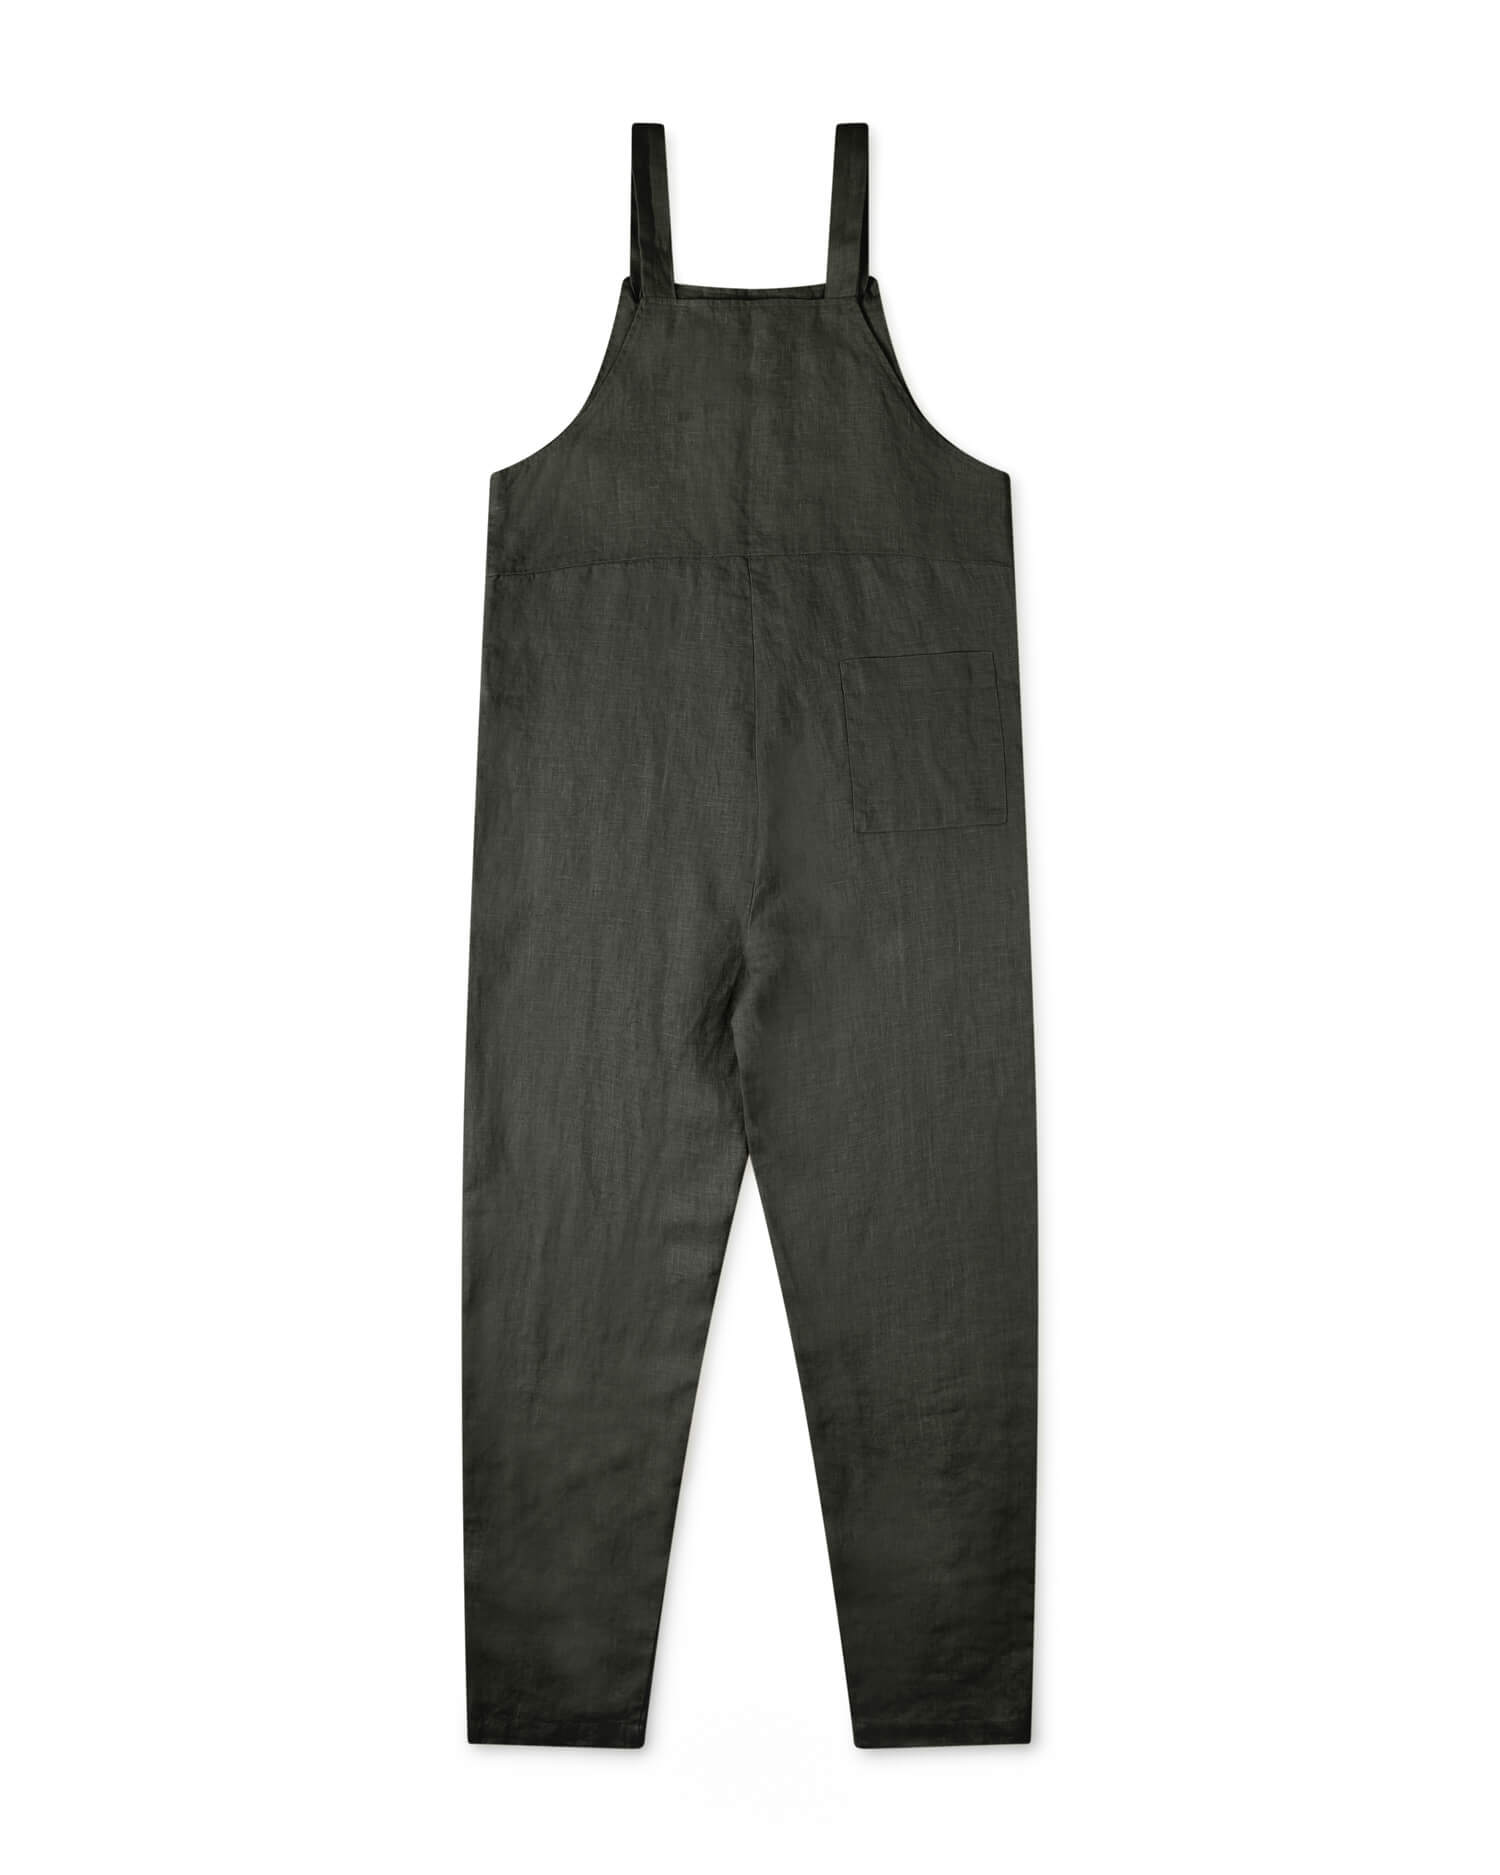 Black linen jumpsuit from Matona